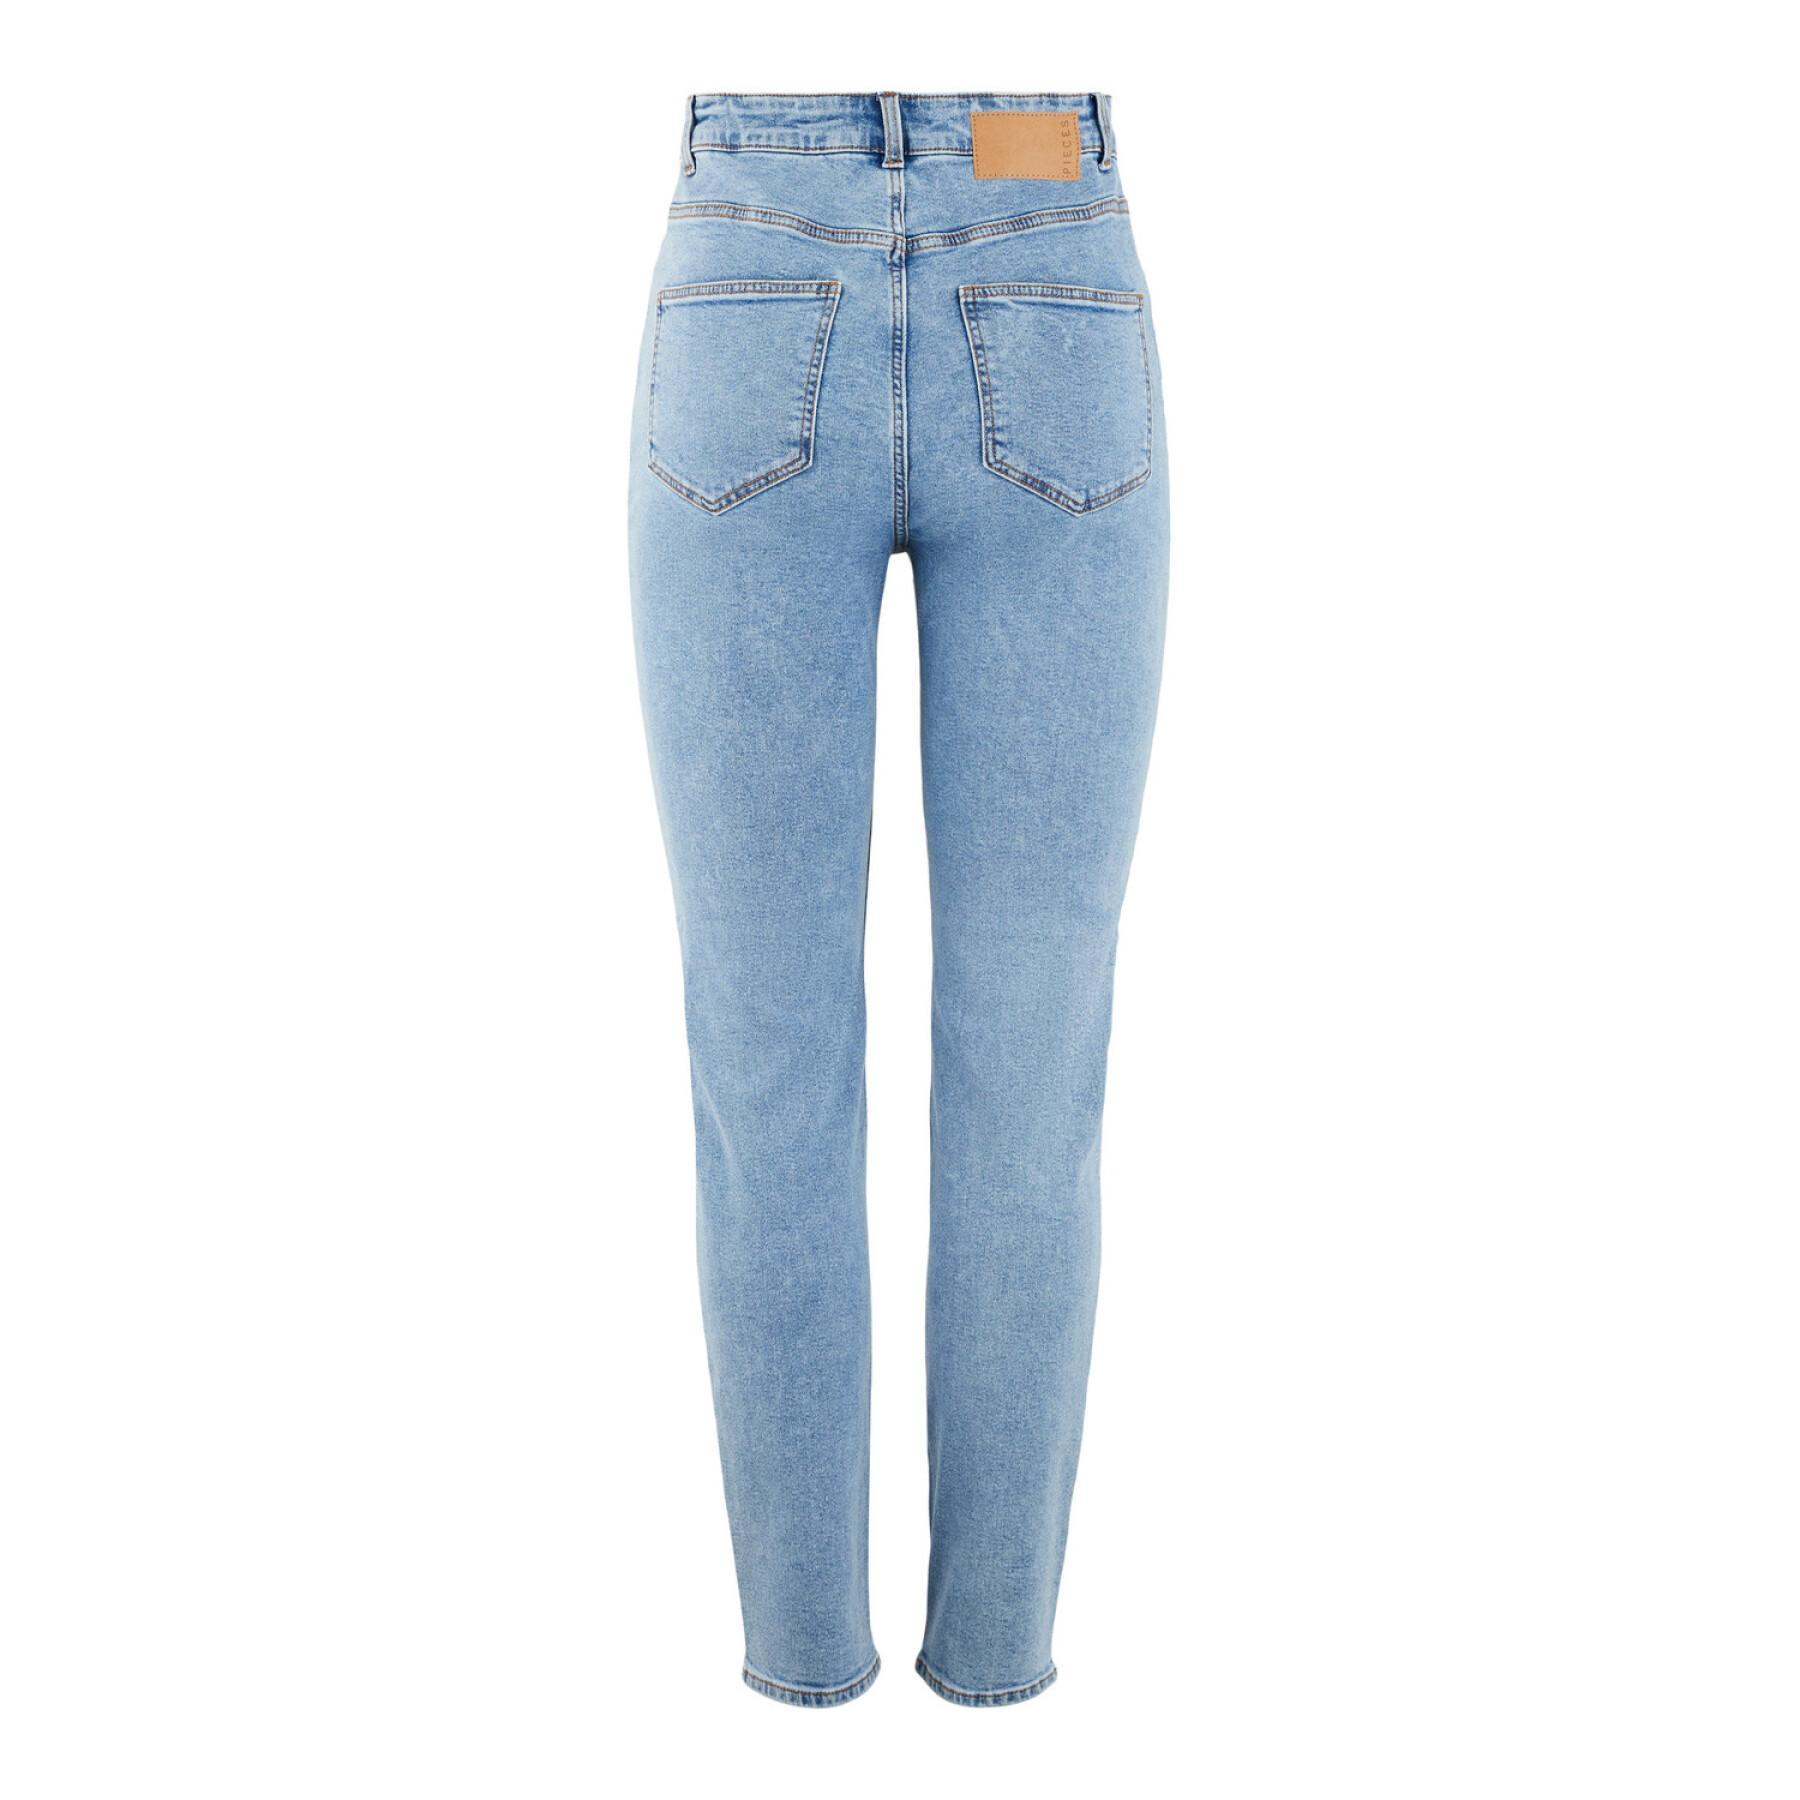 Women's jeans Pieces Kesia